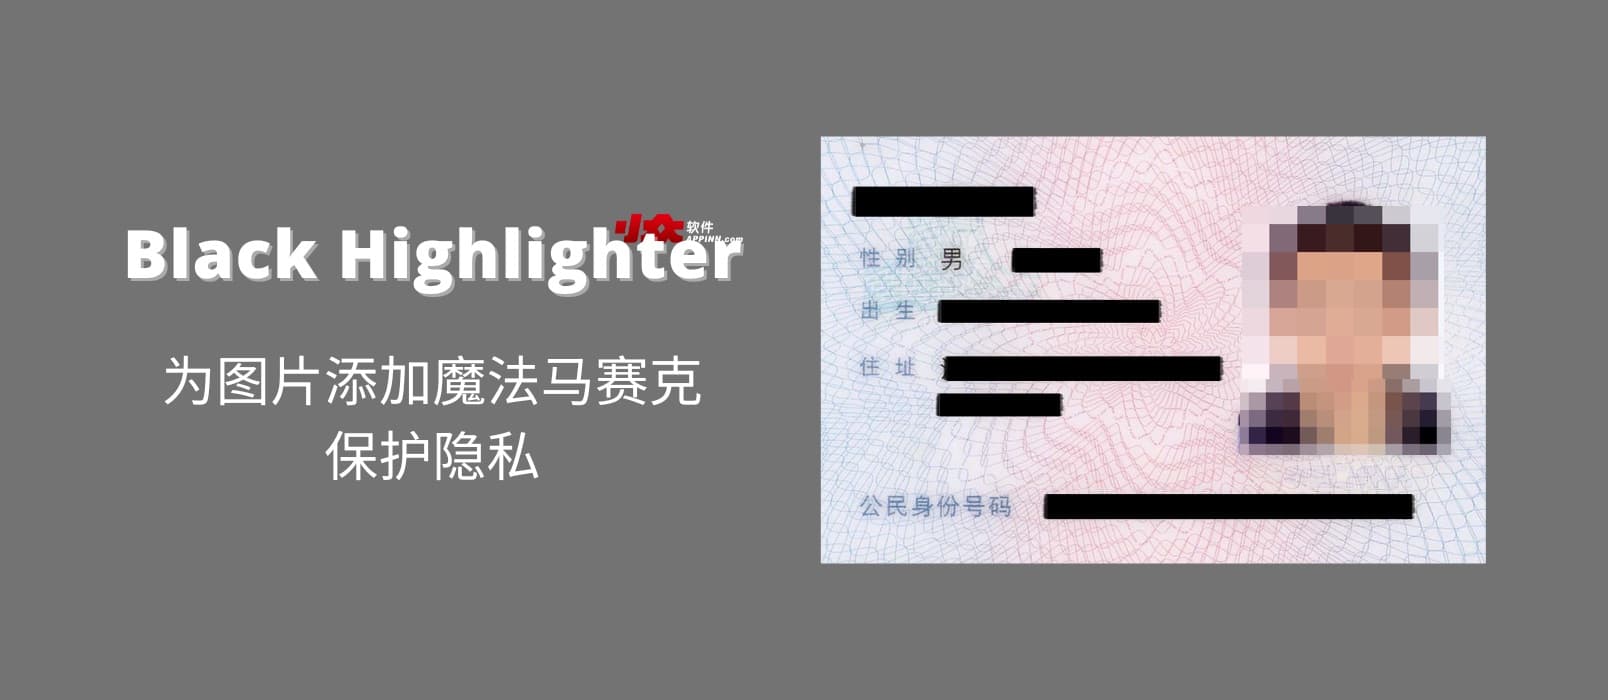 Black Highlighter – 为图片上的私密内容打码（漂亮、均匀、完整），保护隐私[macOS/iOS]